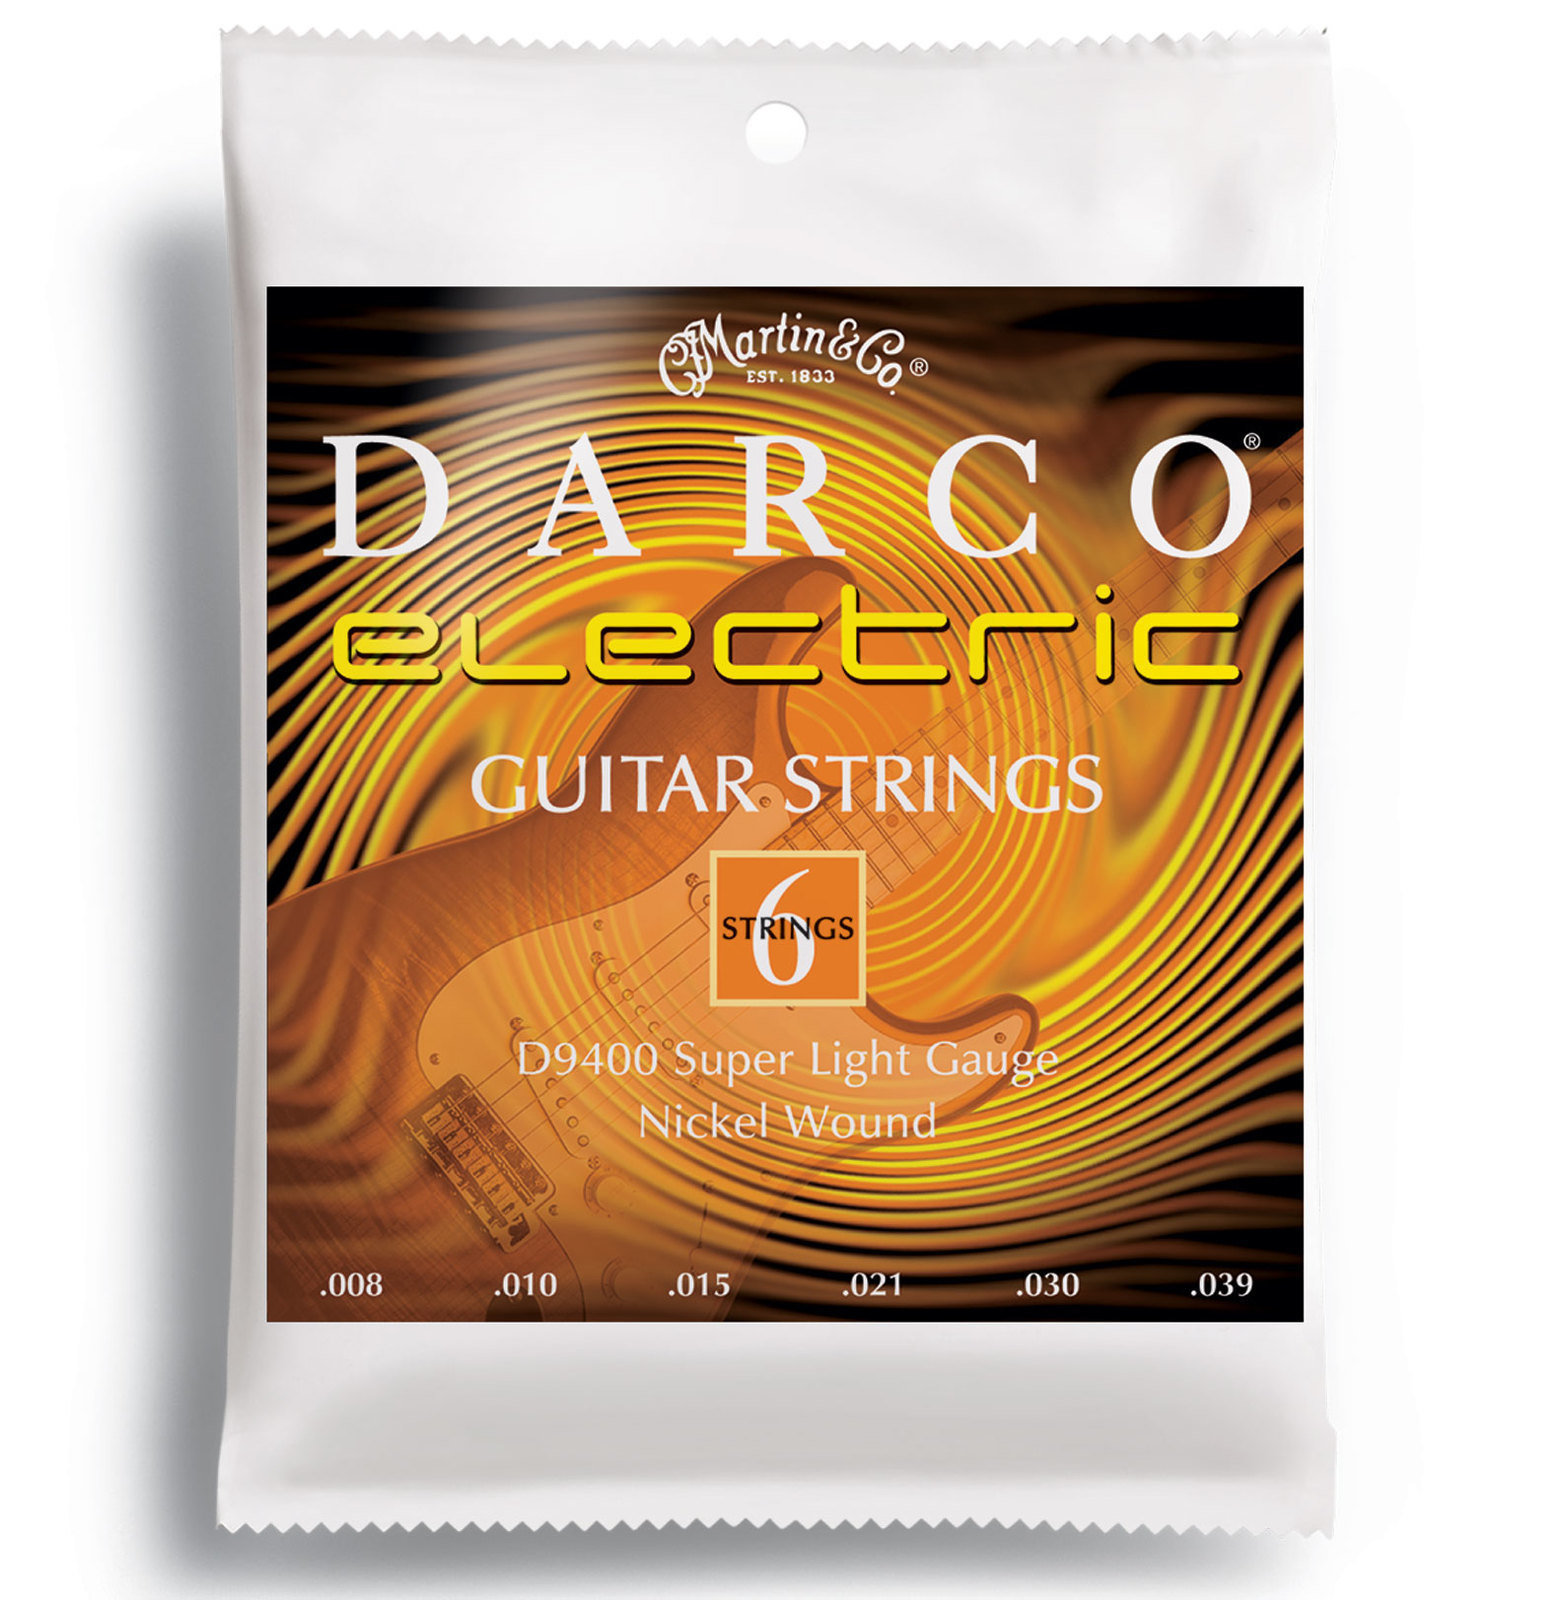 Struny do gitary elektrycznej Martin D9400 Darco Electric Guitar Strings, Super Light